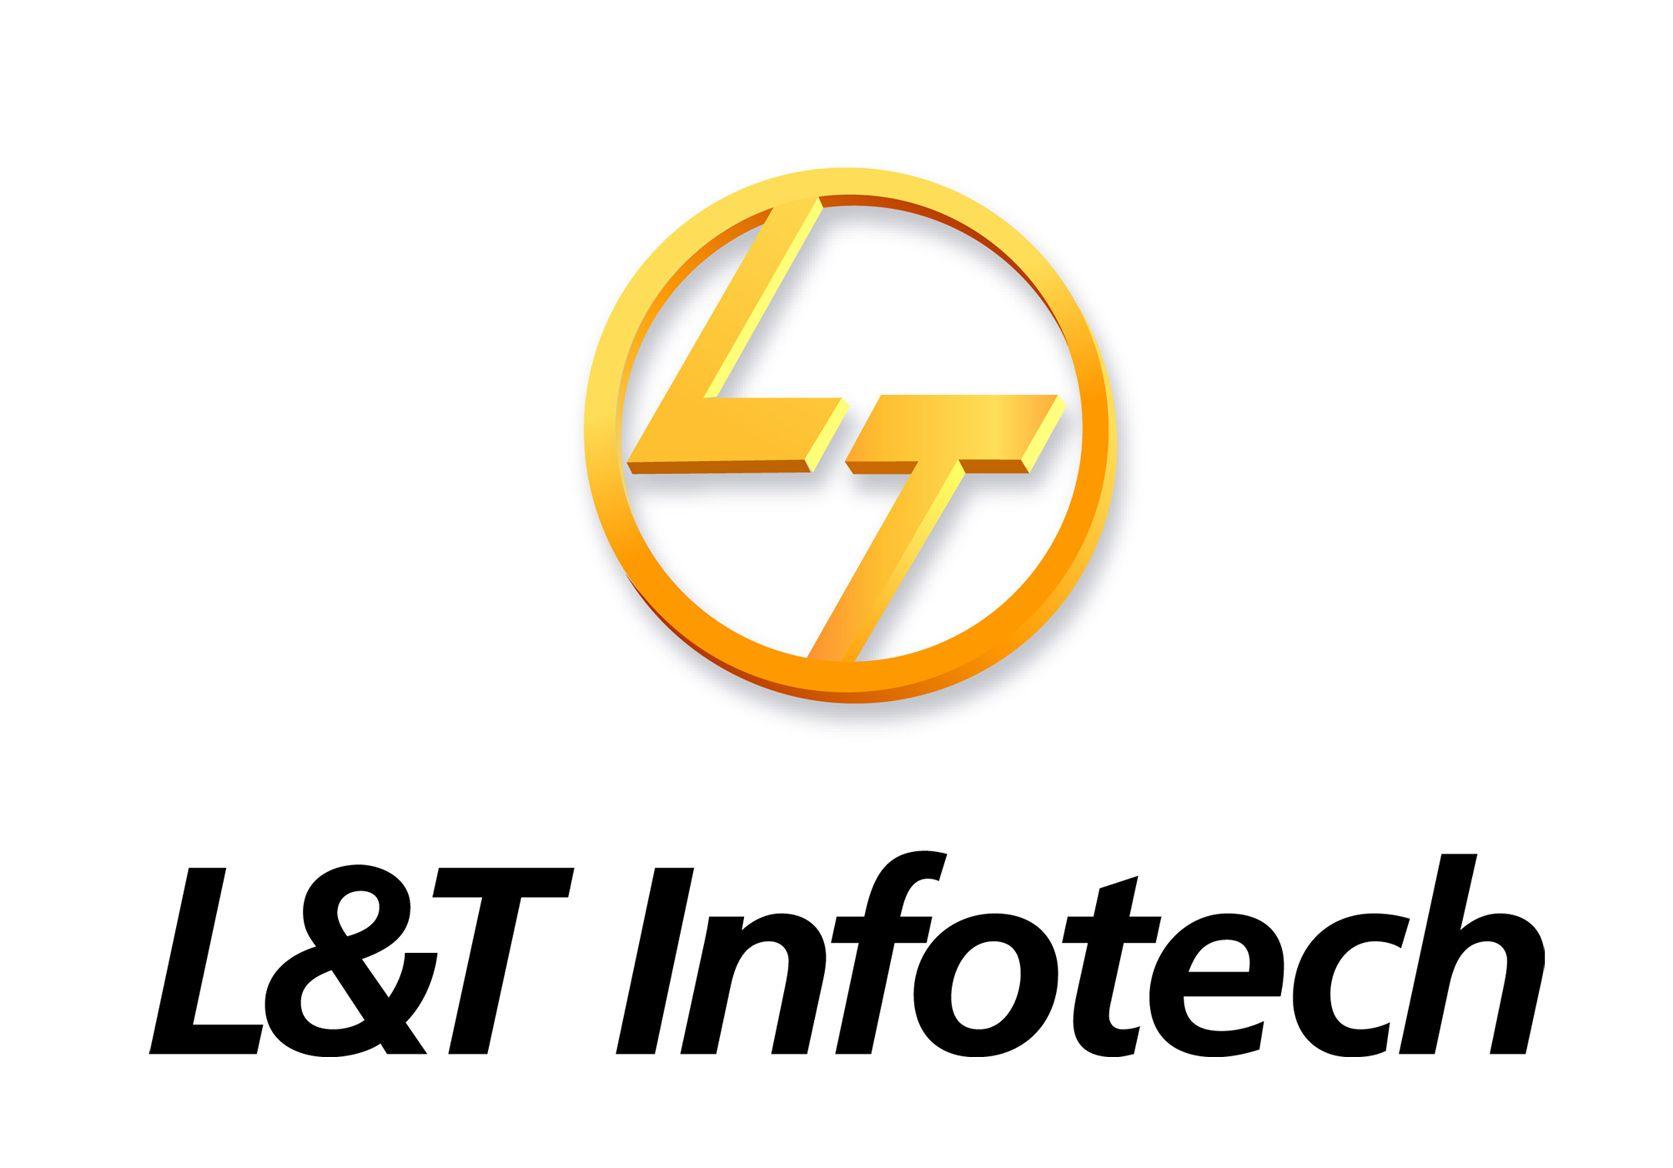 L Company Logo - L&T Infotech